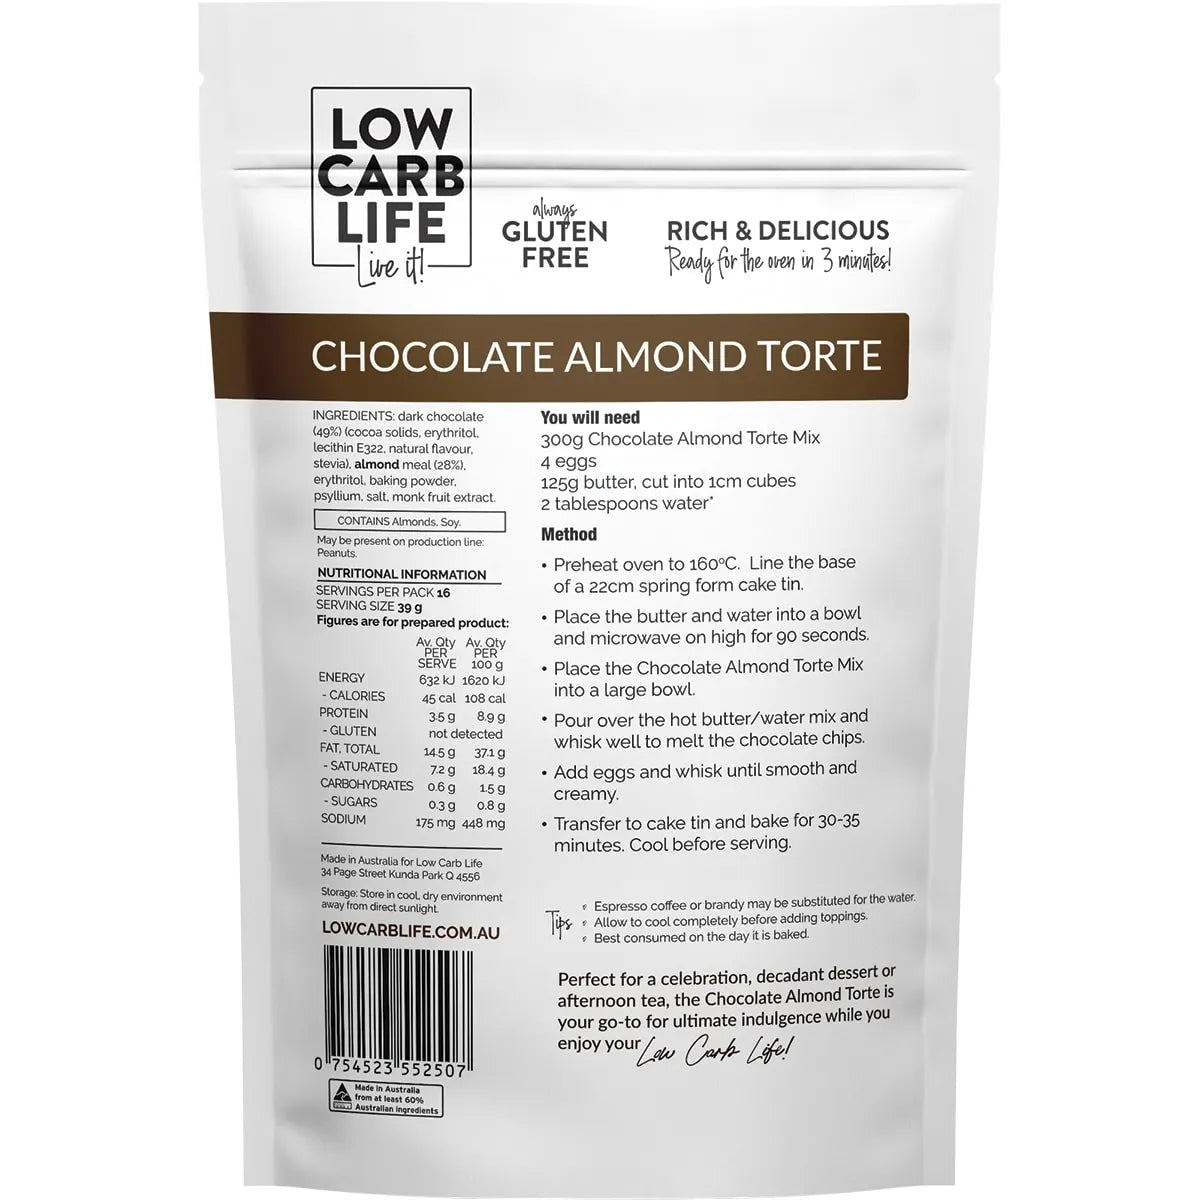 LOW CARB LIFE Chocolate Almond Torte Keto Bake Mix 300g